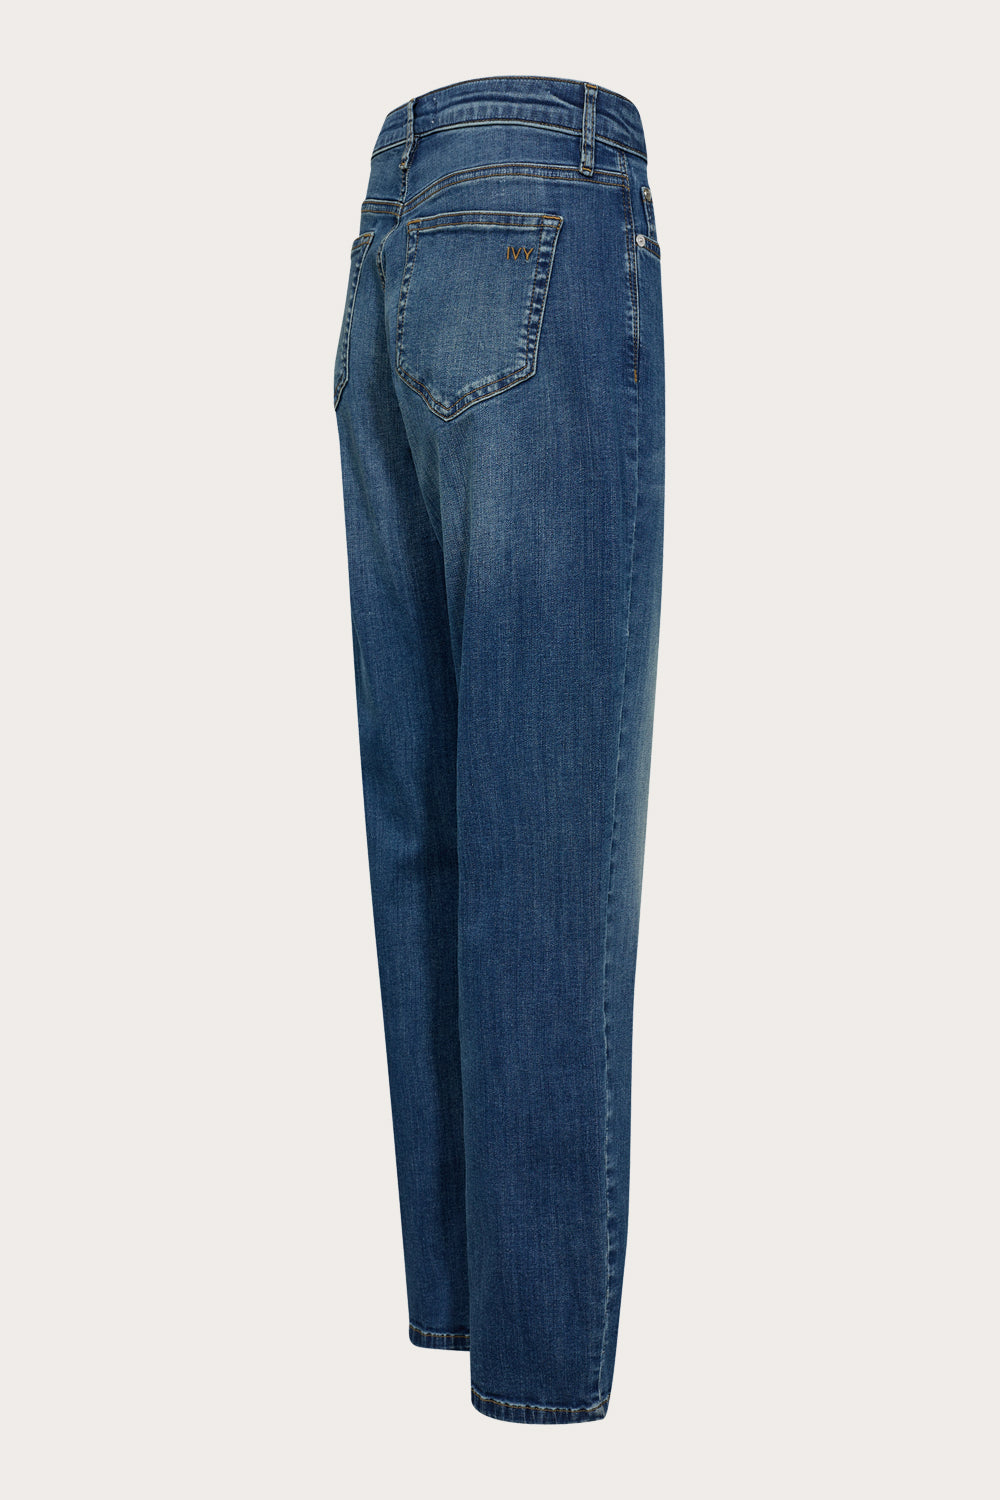 IVY Copenhagen IVY-Tonya Jeans Wash Santa Cruz Dist. Jeans & Pants